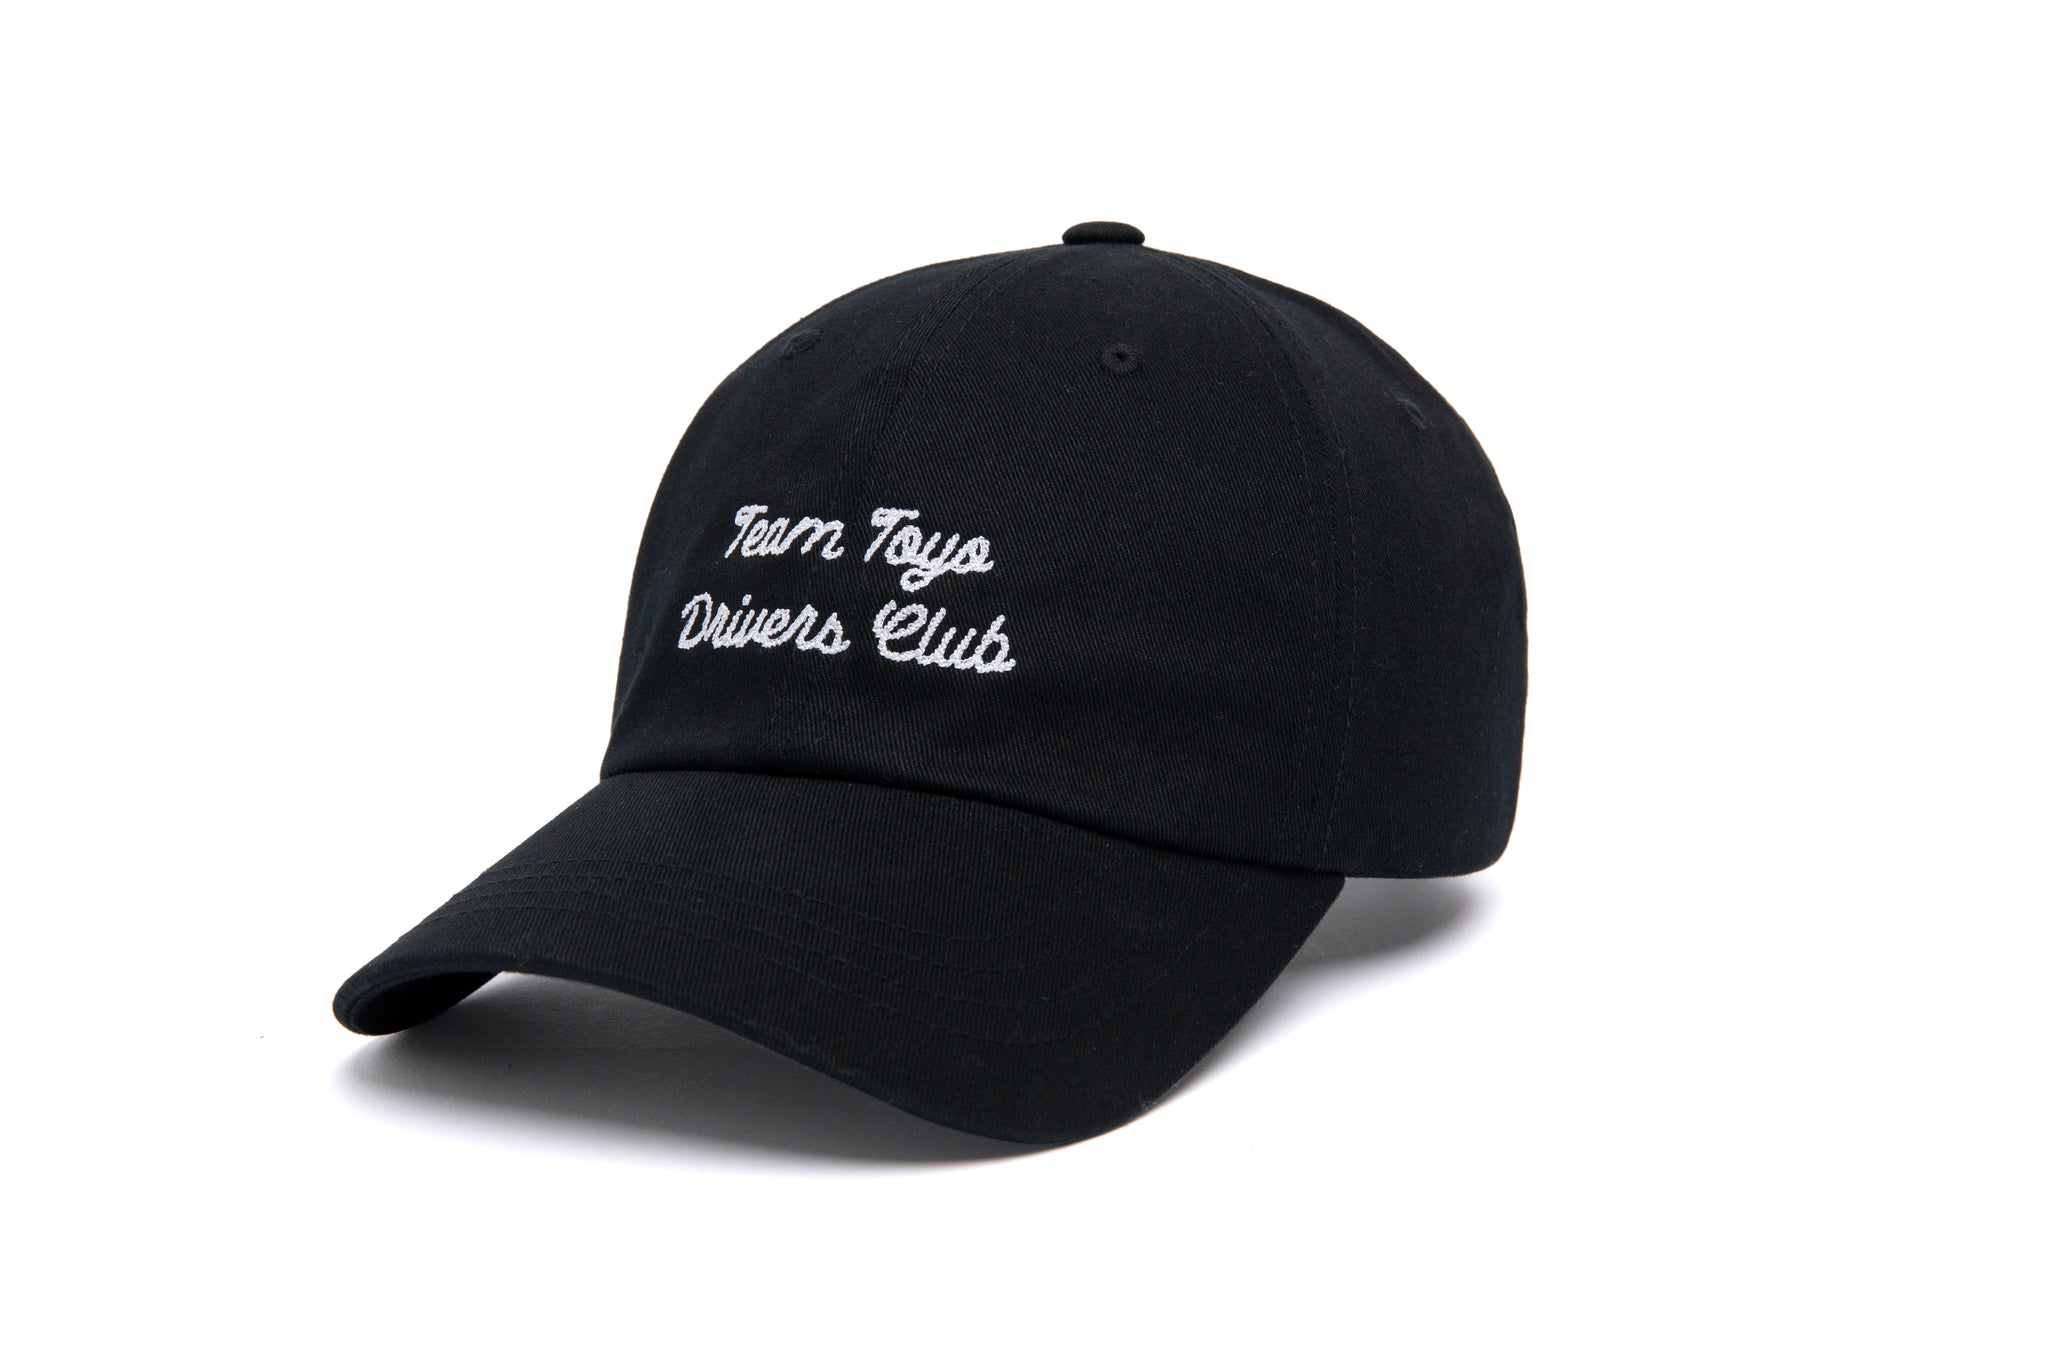 Team Toyo Drivers Club Dad Hat Black